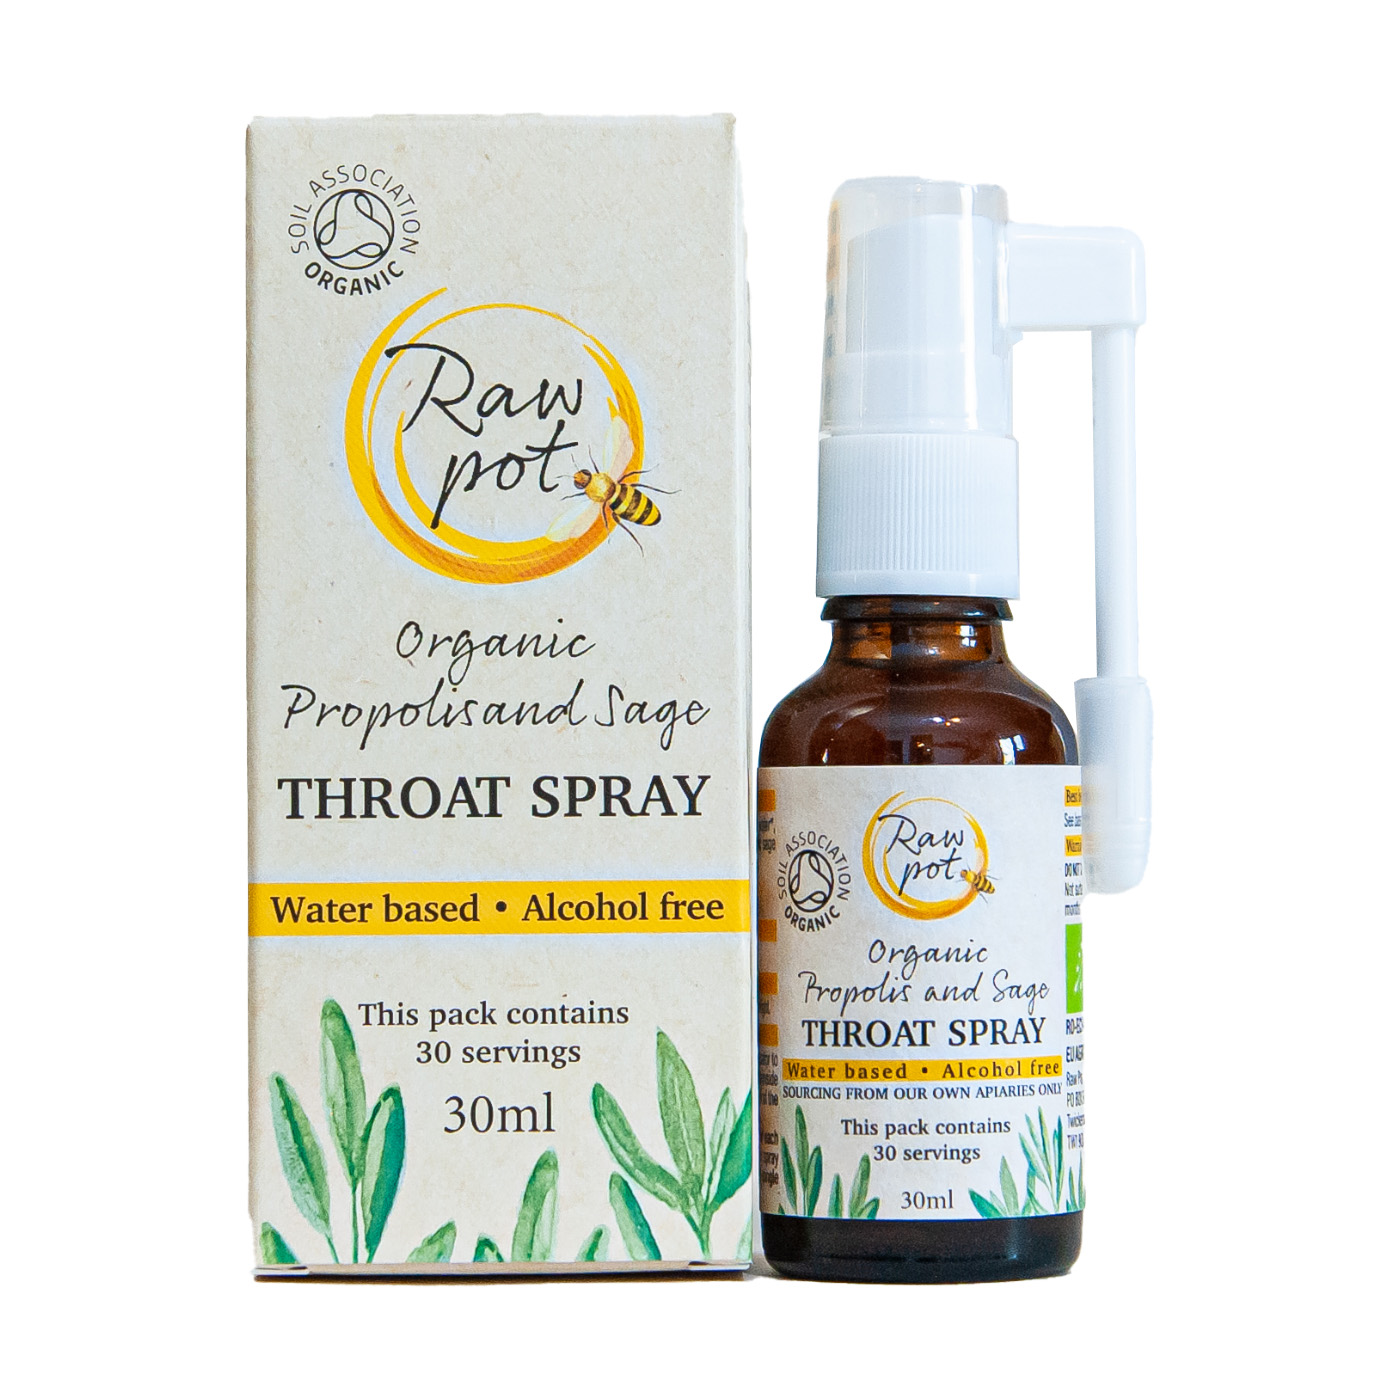 Organic Propolis and Sage Throat Spray